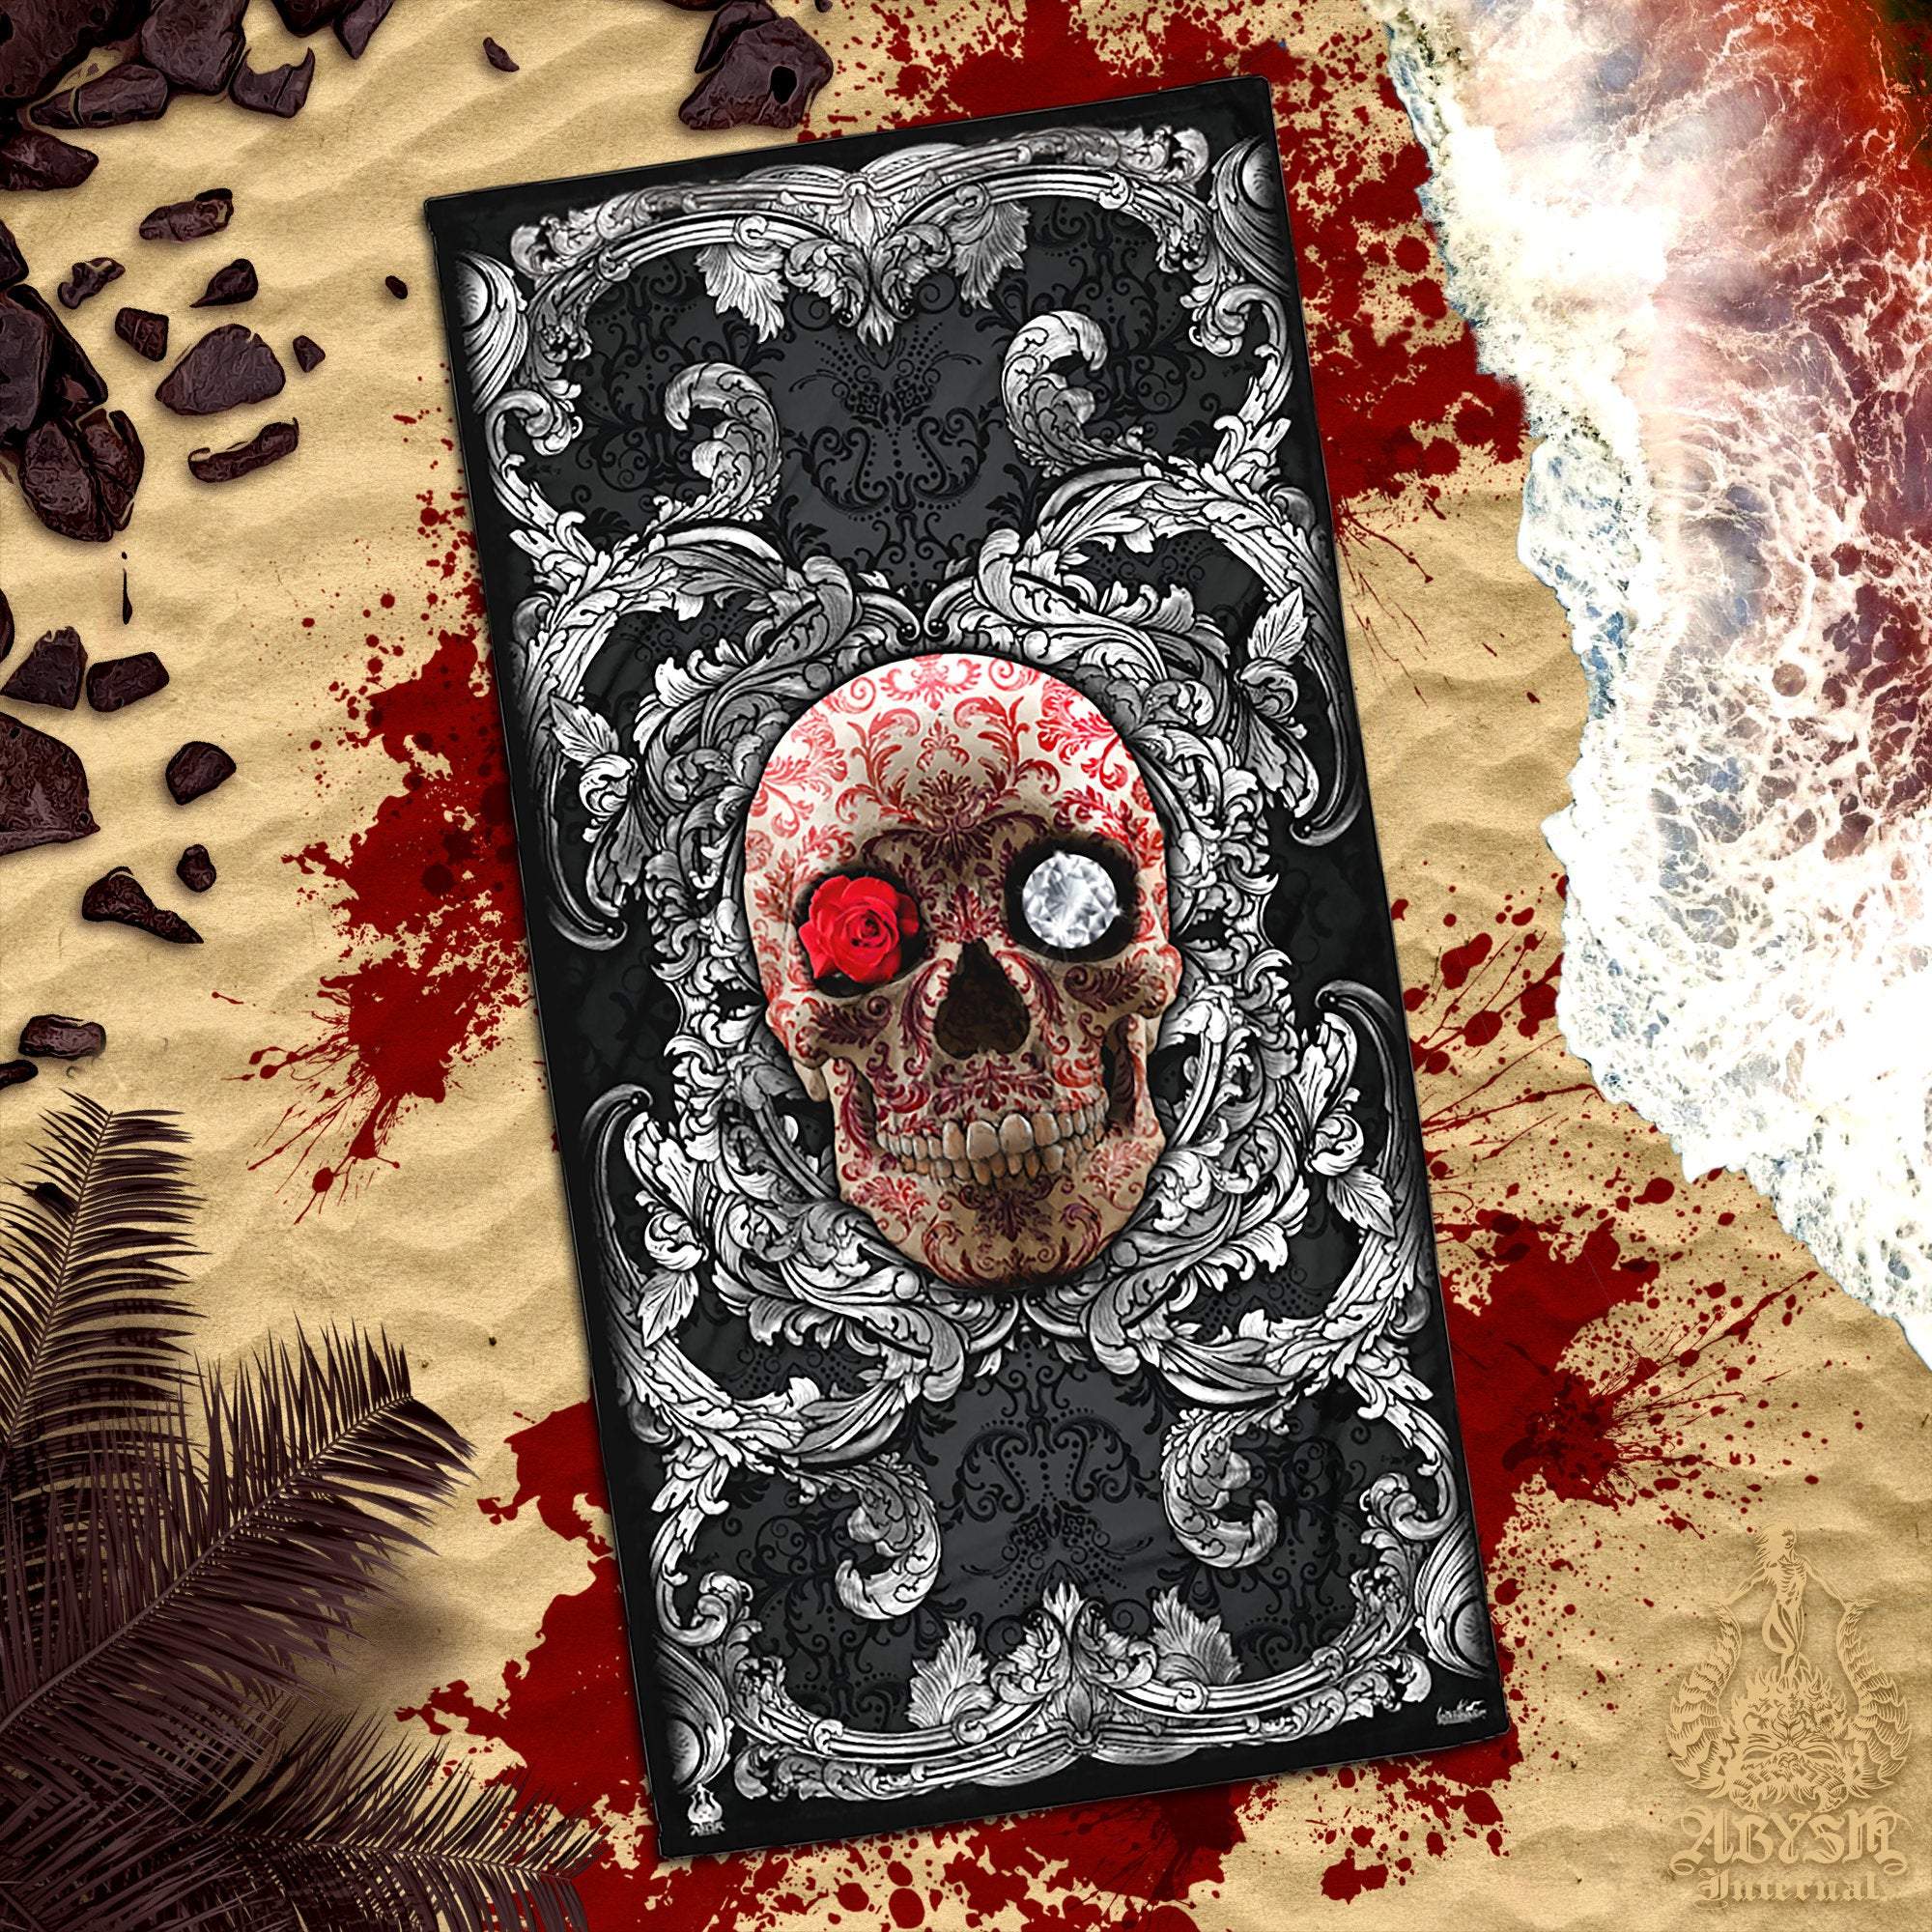 Skull Beach Towel, Goth, Macabre Art, Fun Baroque Ornaments - Silver & Red - Abysm Internal